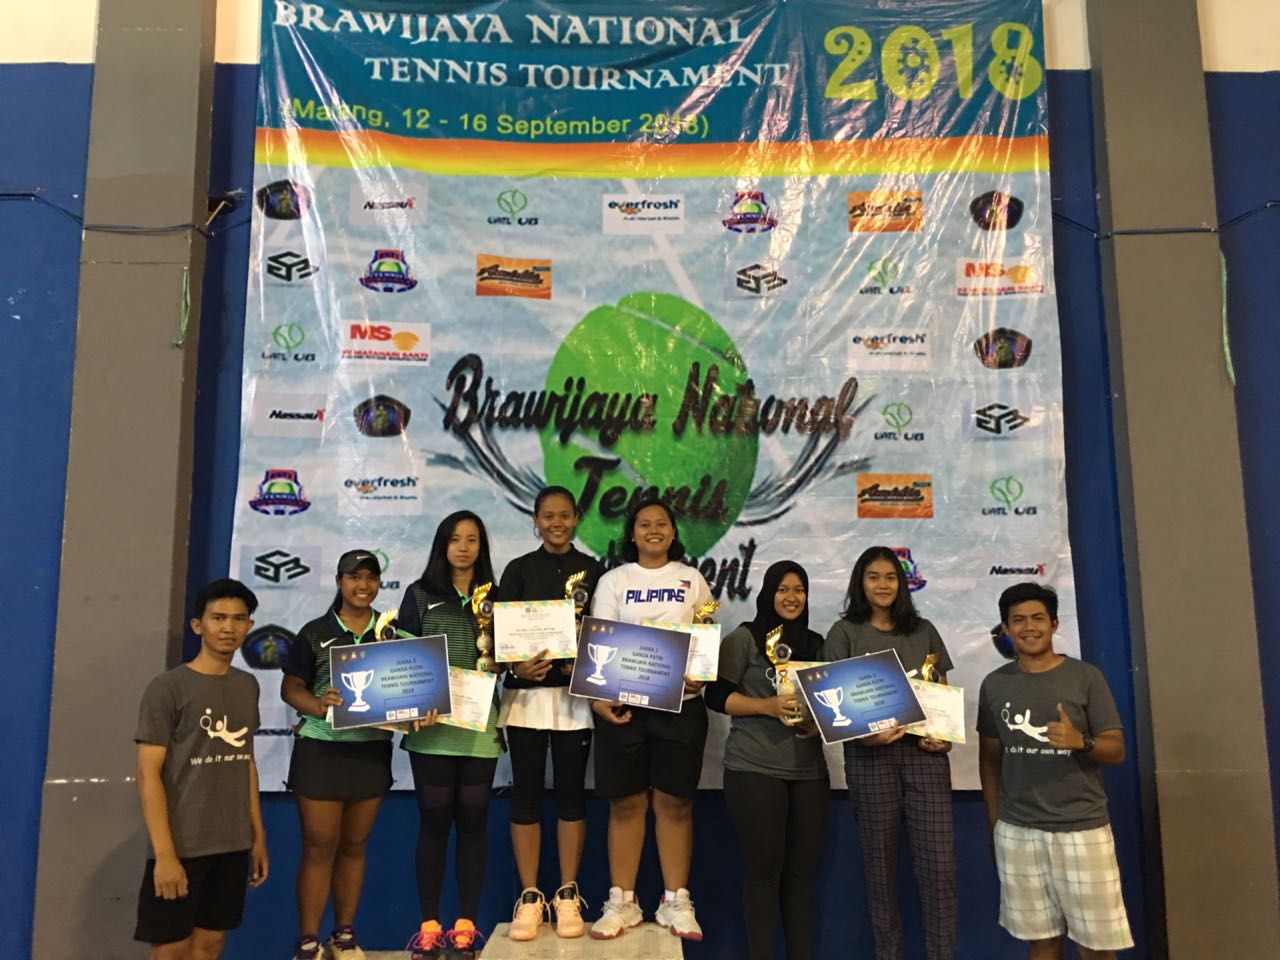 Foto BRAWIJAYA NATIONAL TENNIS TOURNAMENT 2018 